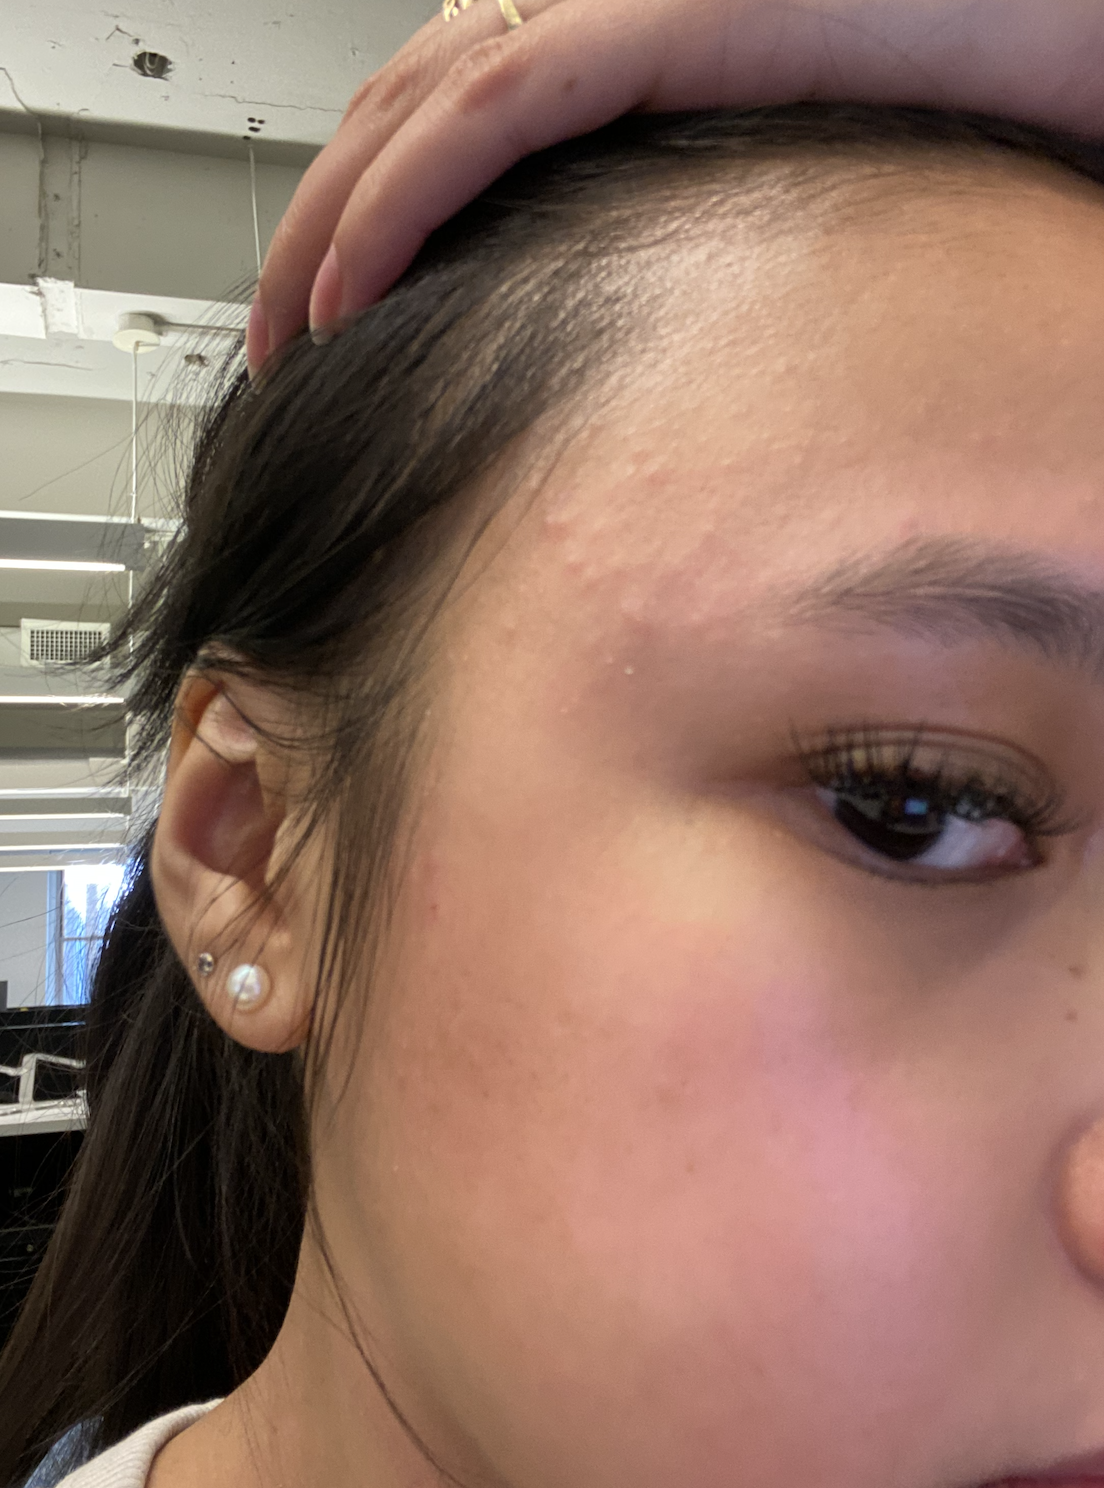 close up of forehead with irritation rash